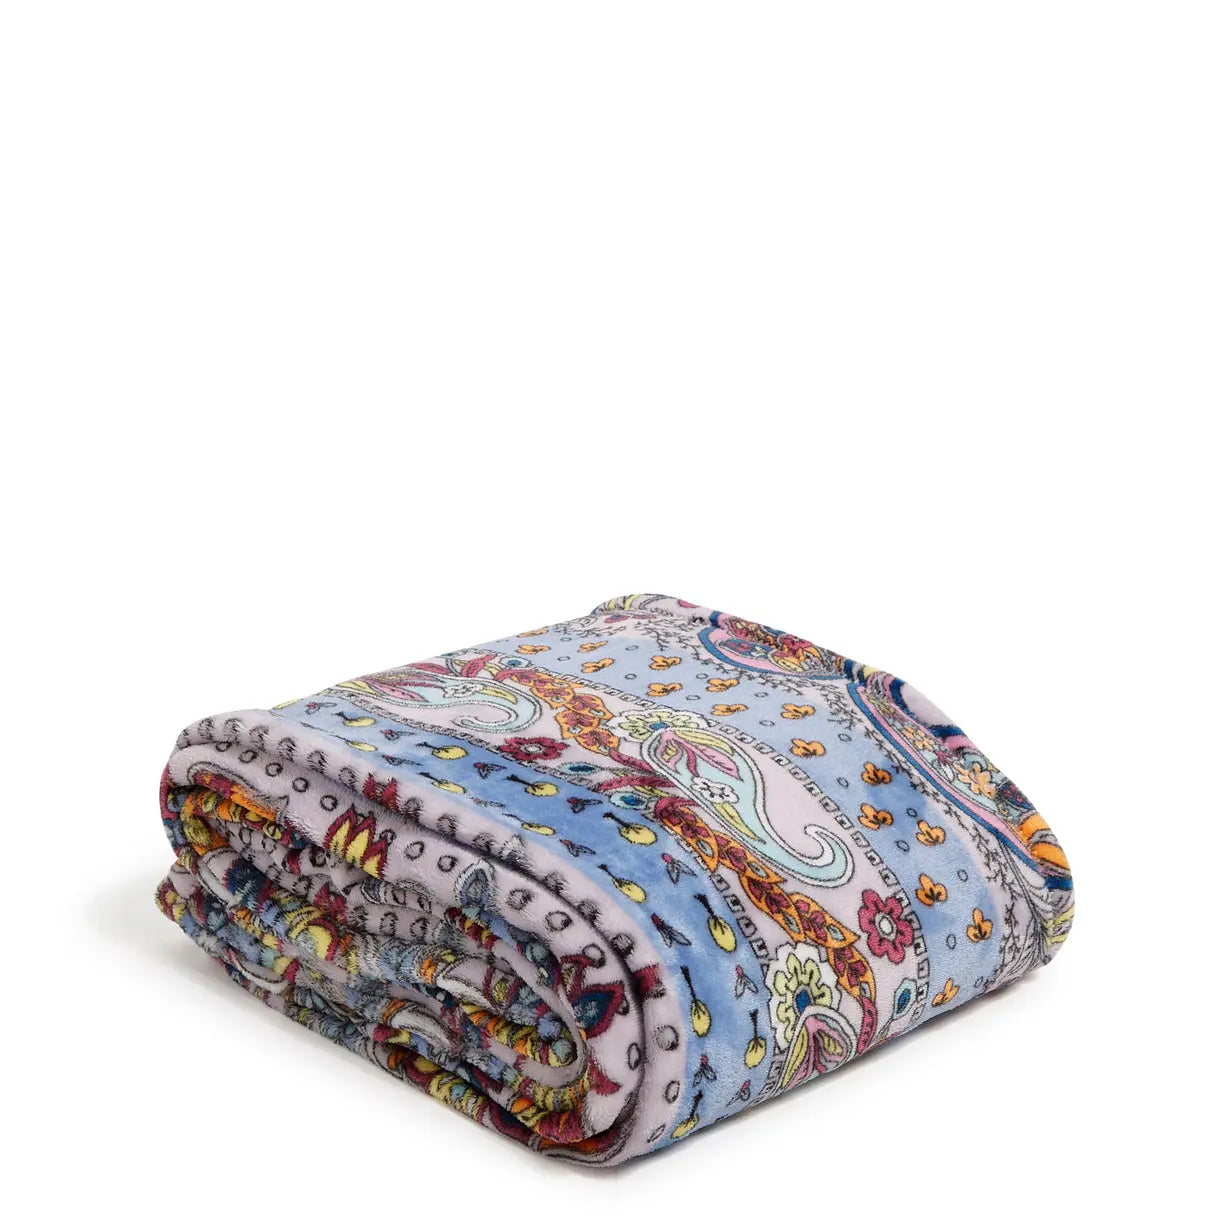 Vera Bradley Plush Throw Blanket in Provence Paisley pattern.